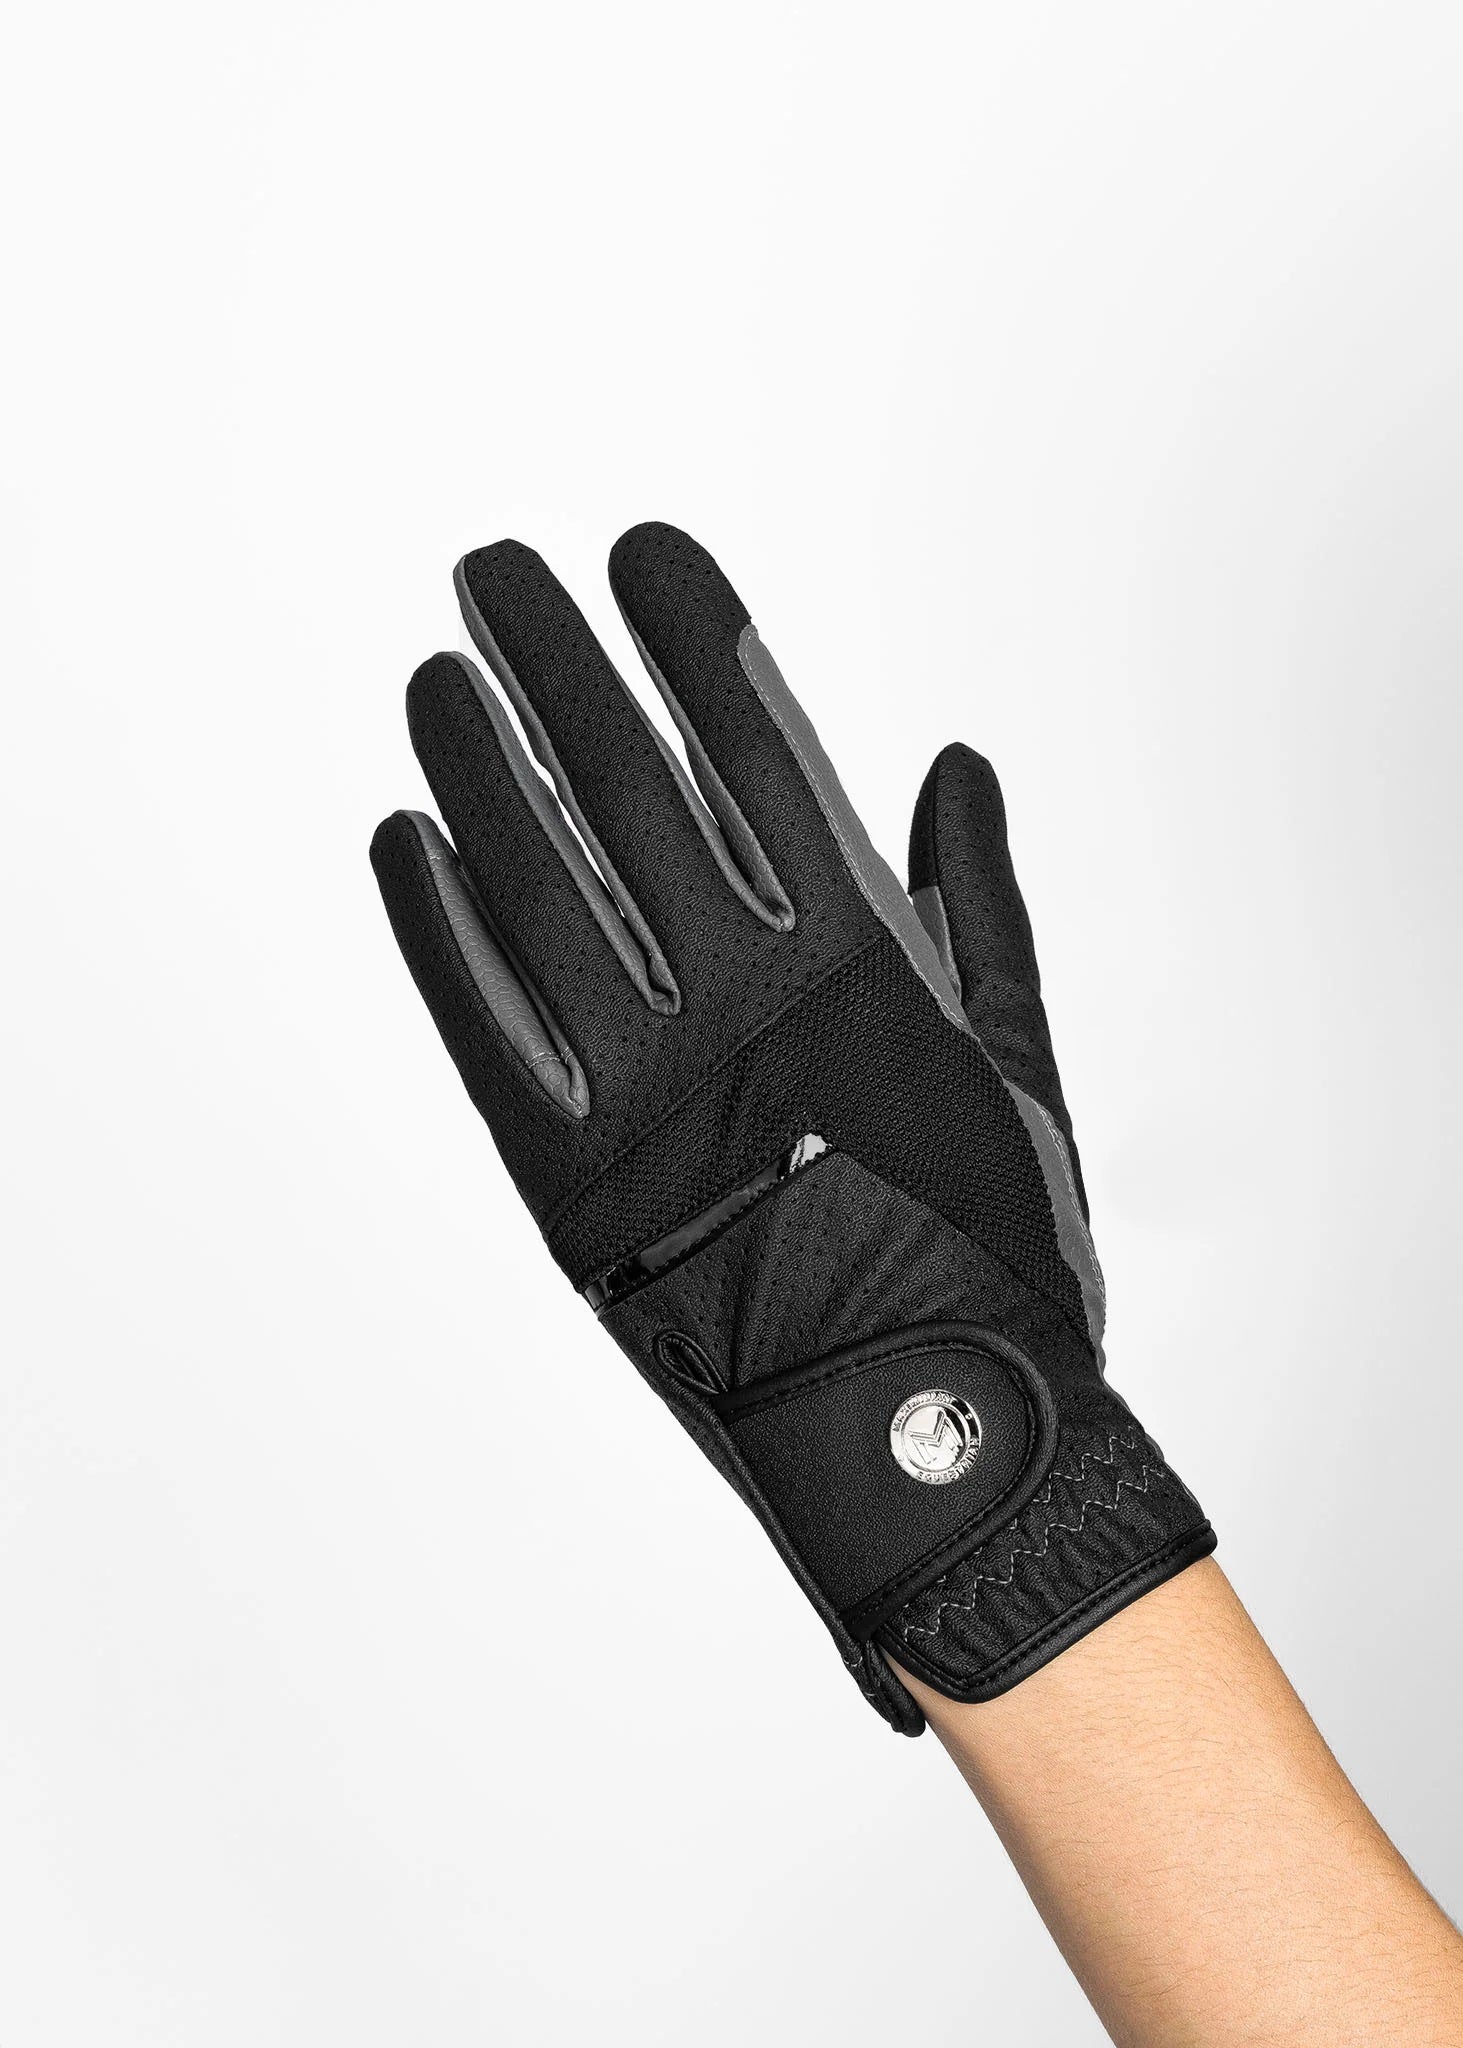 Max Riding Gloves - Black/Grey